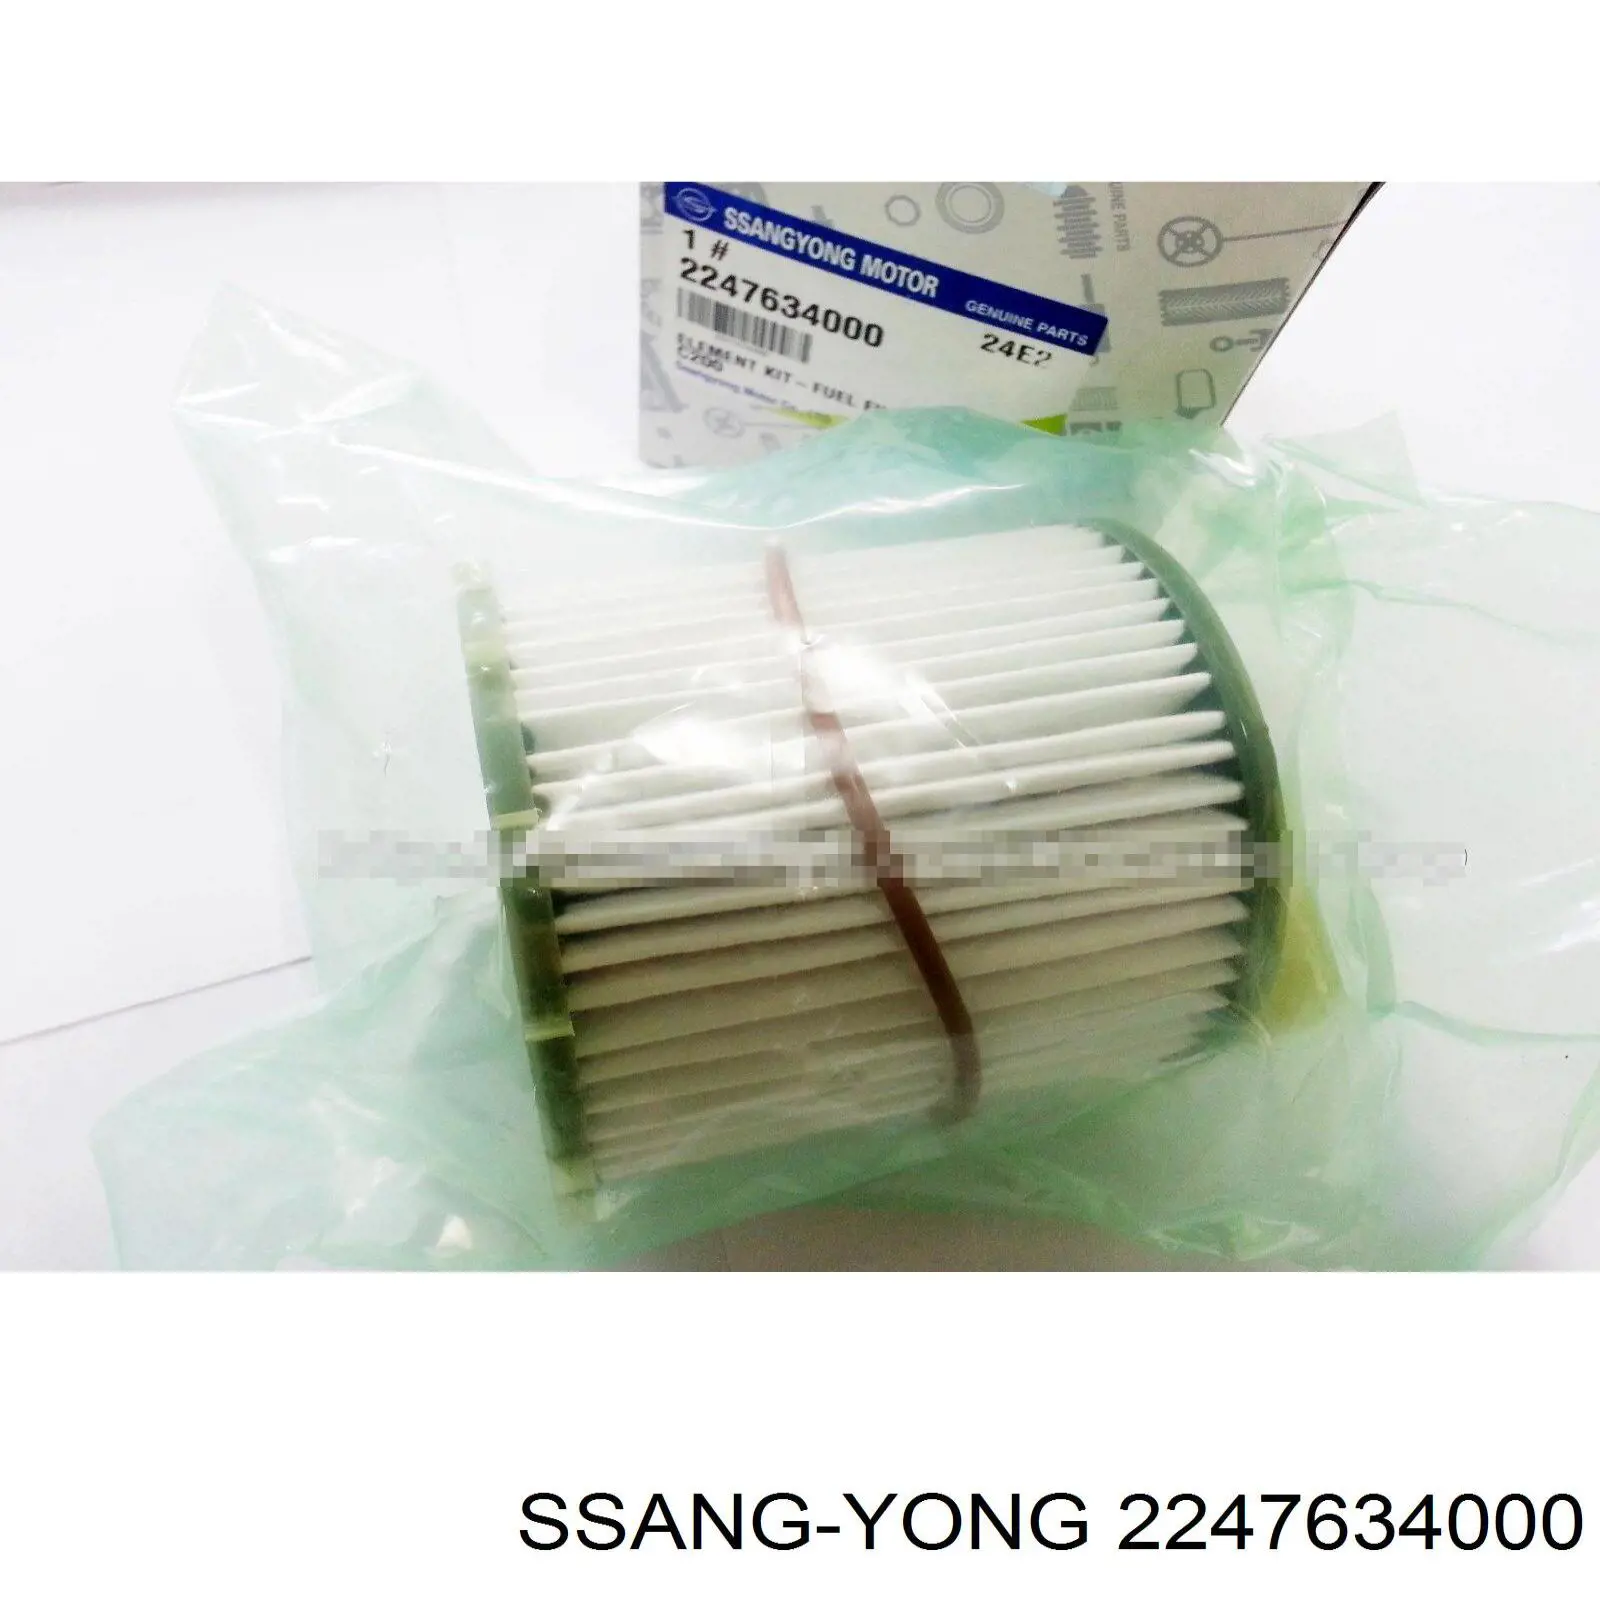 2247634000 Ssang Yong filtro de combustible